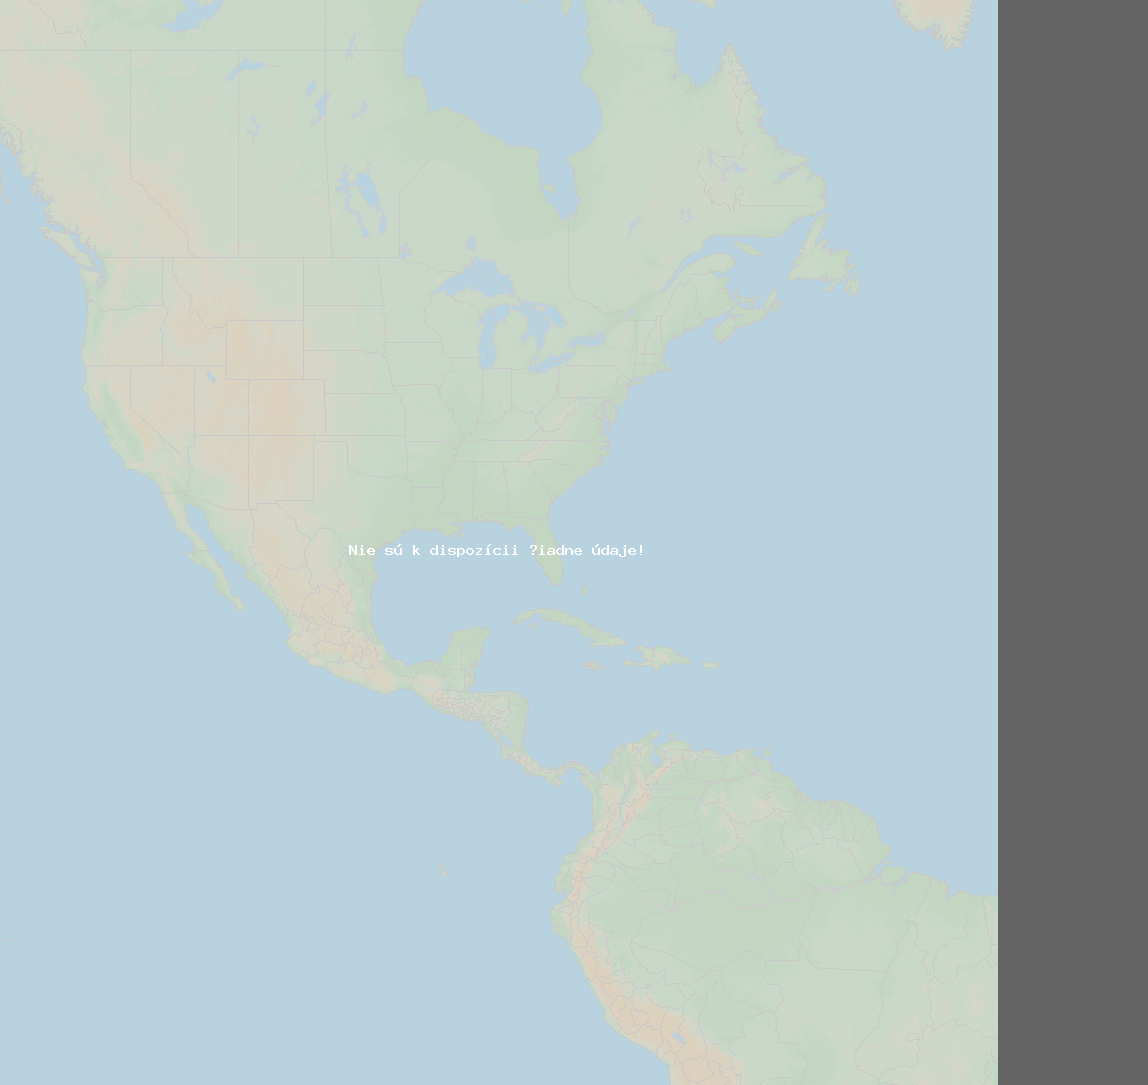 Pomer bleskov (Stanica Ottawa) North America 2020 